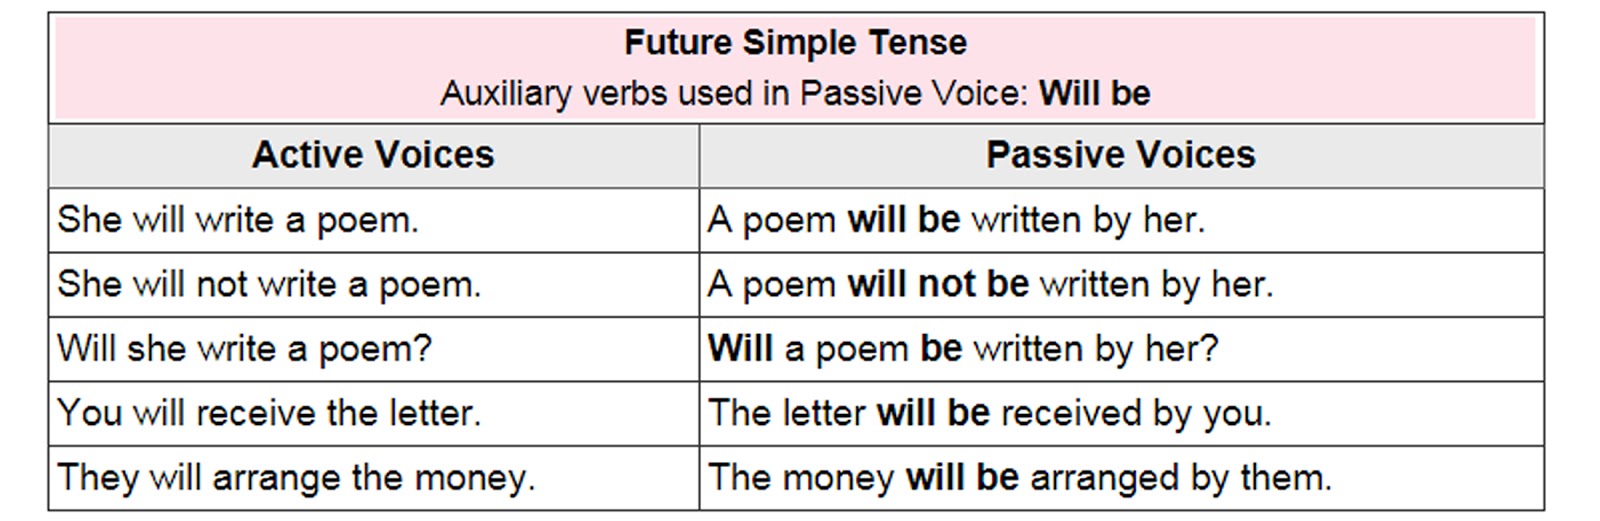 Active Passive Voice Simple Future Tense Exercises